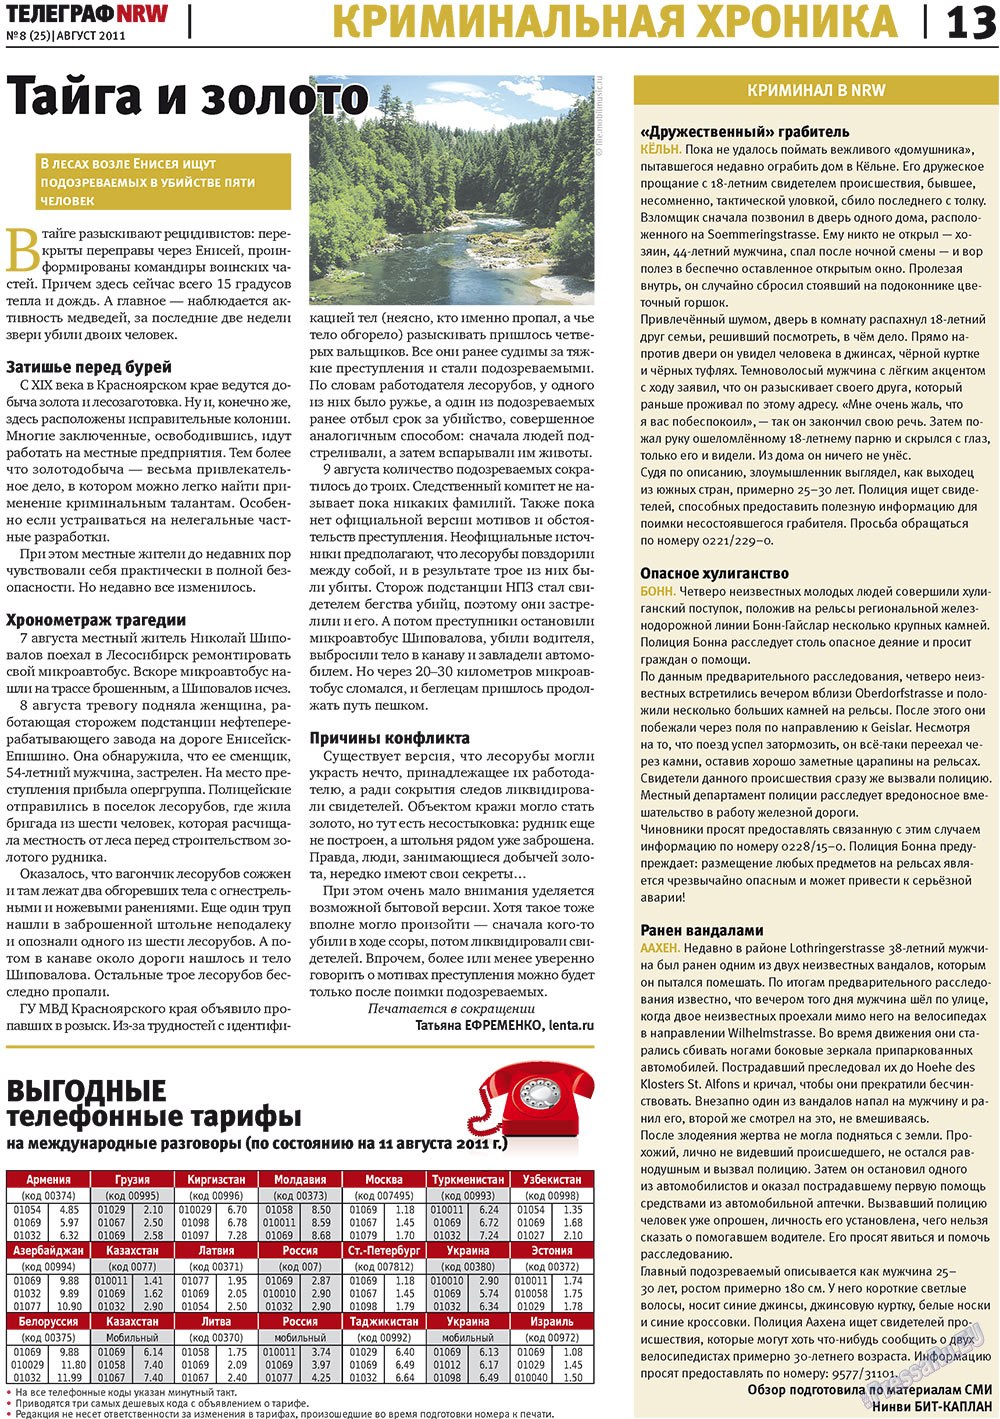 Телеграф NRW, газета. 2011 №8 стр.13